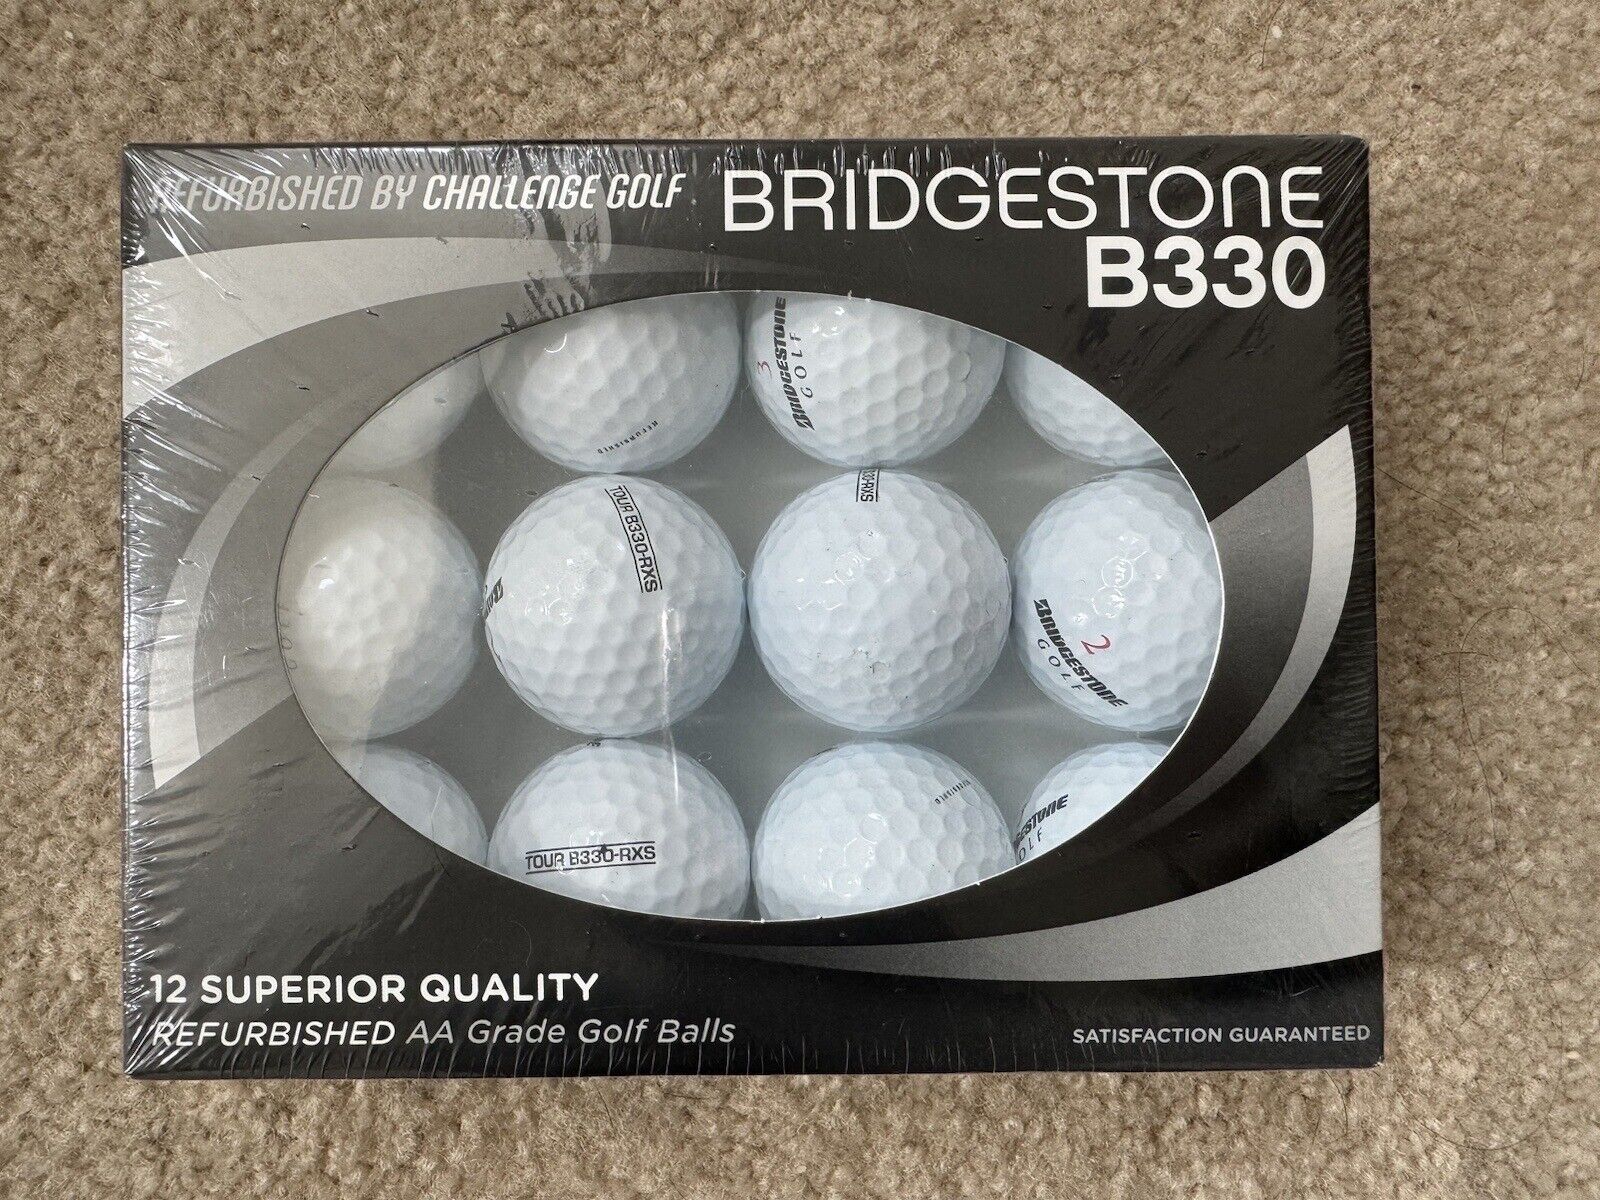 Bridgestone B330 Refurbished Challenge Golf 12 AA Grade Golf Balls 1 Dozen New